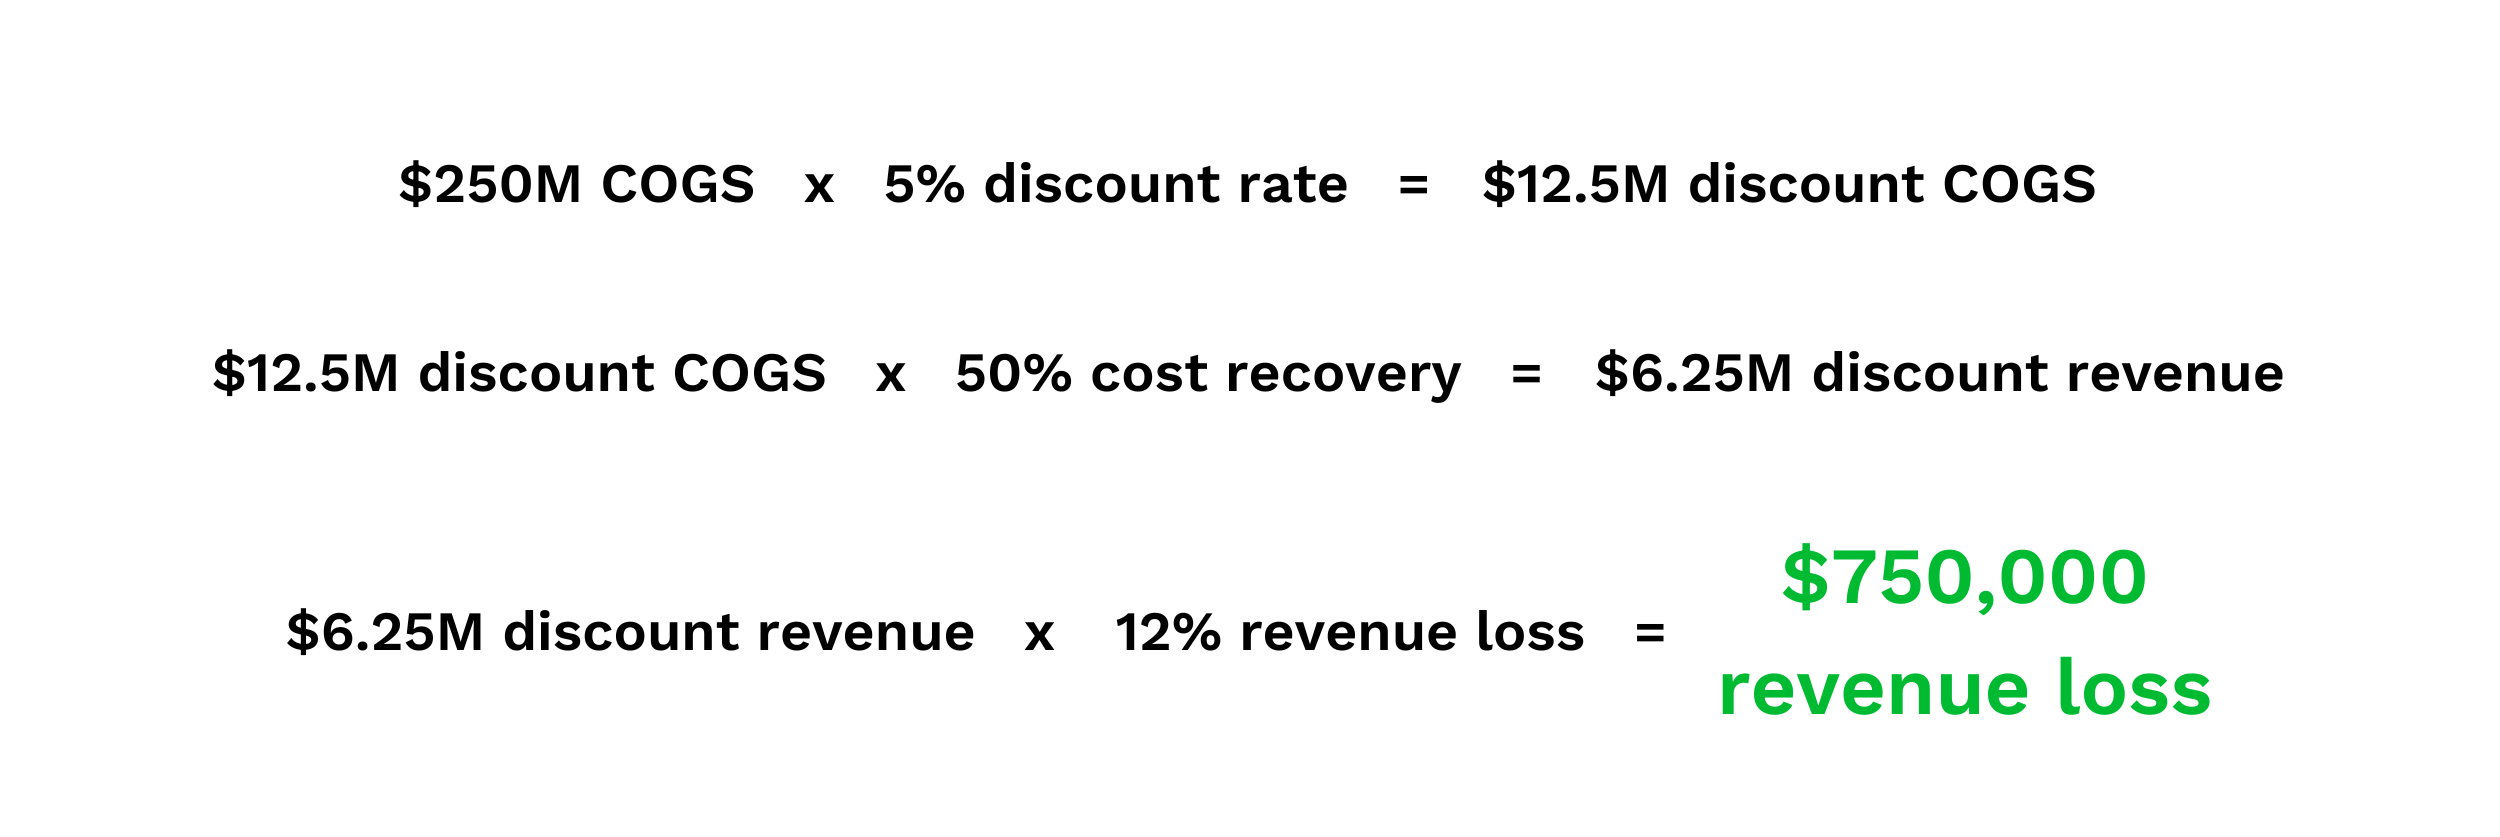 turnover-revenue-loss-750k